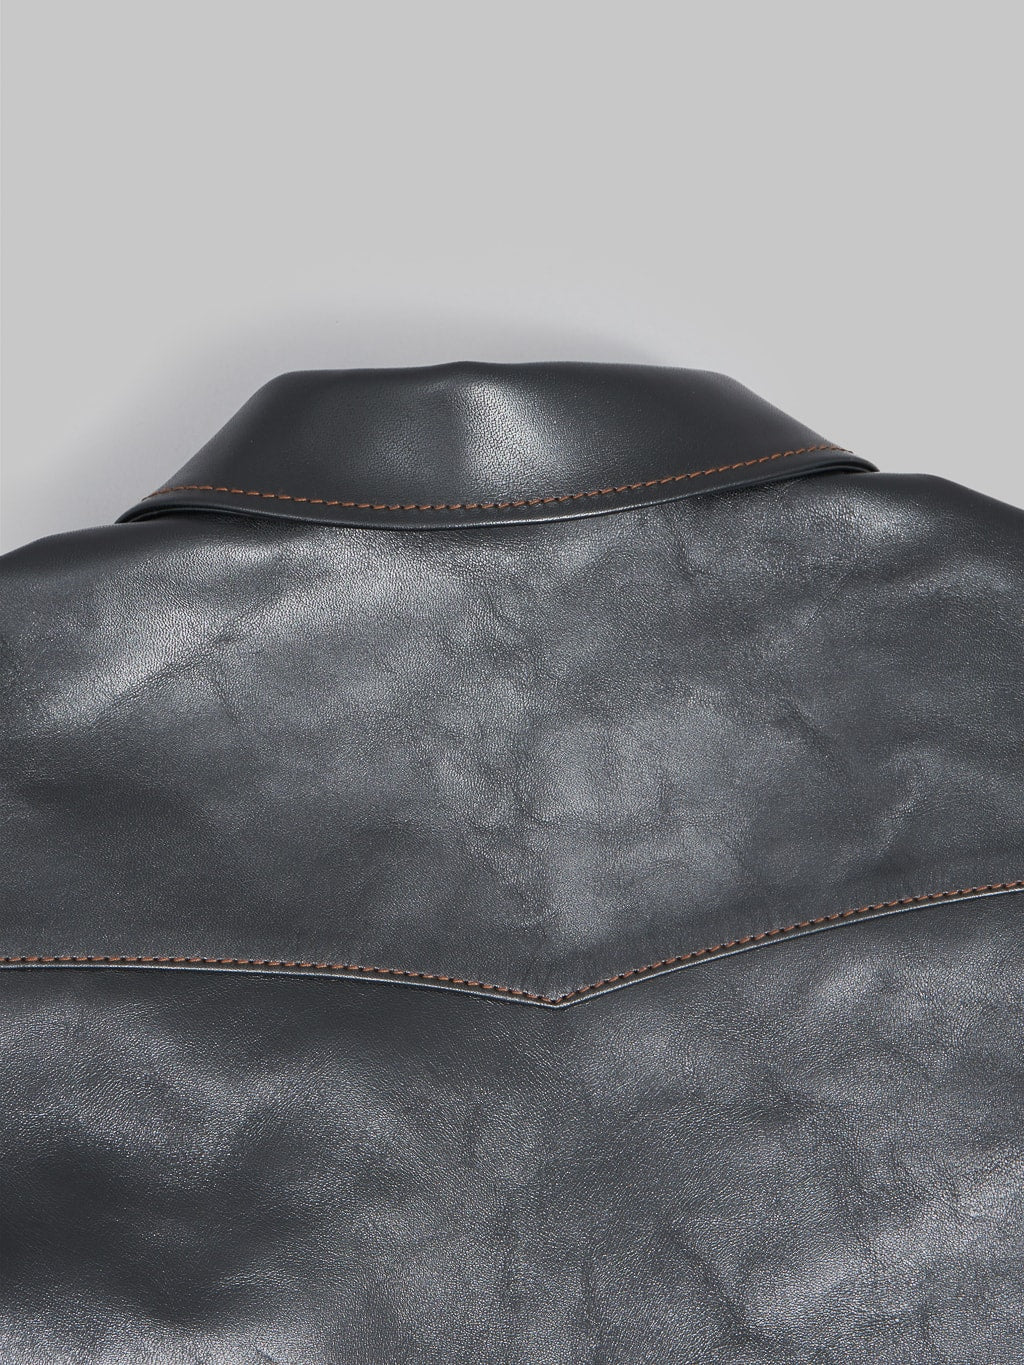 The Flat Head Horsehide leather Single Riders Jacket Black Semi Aniline stitching